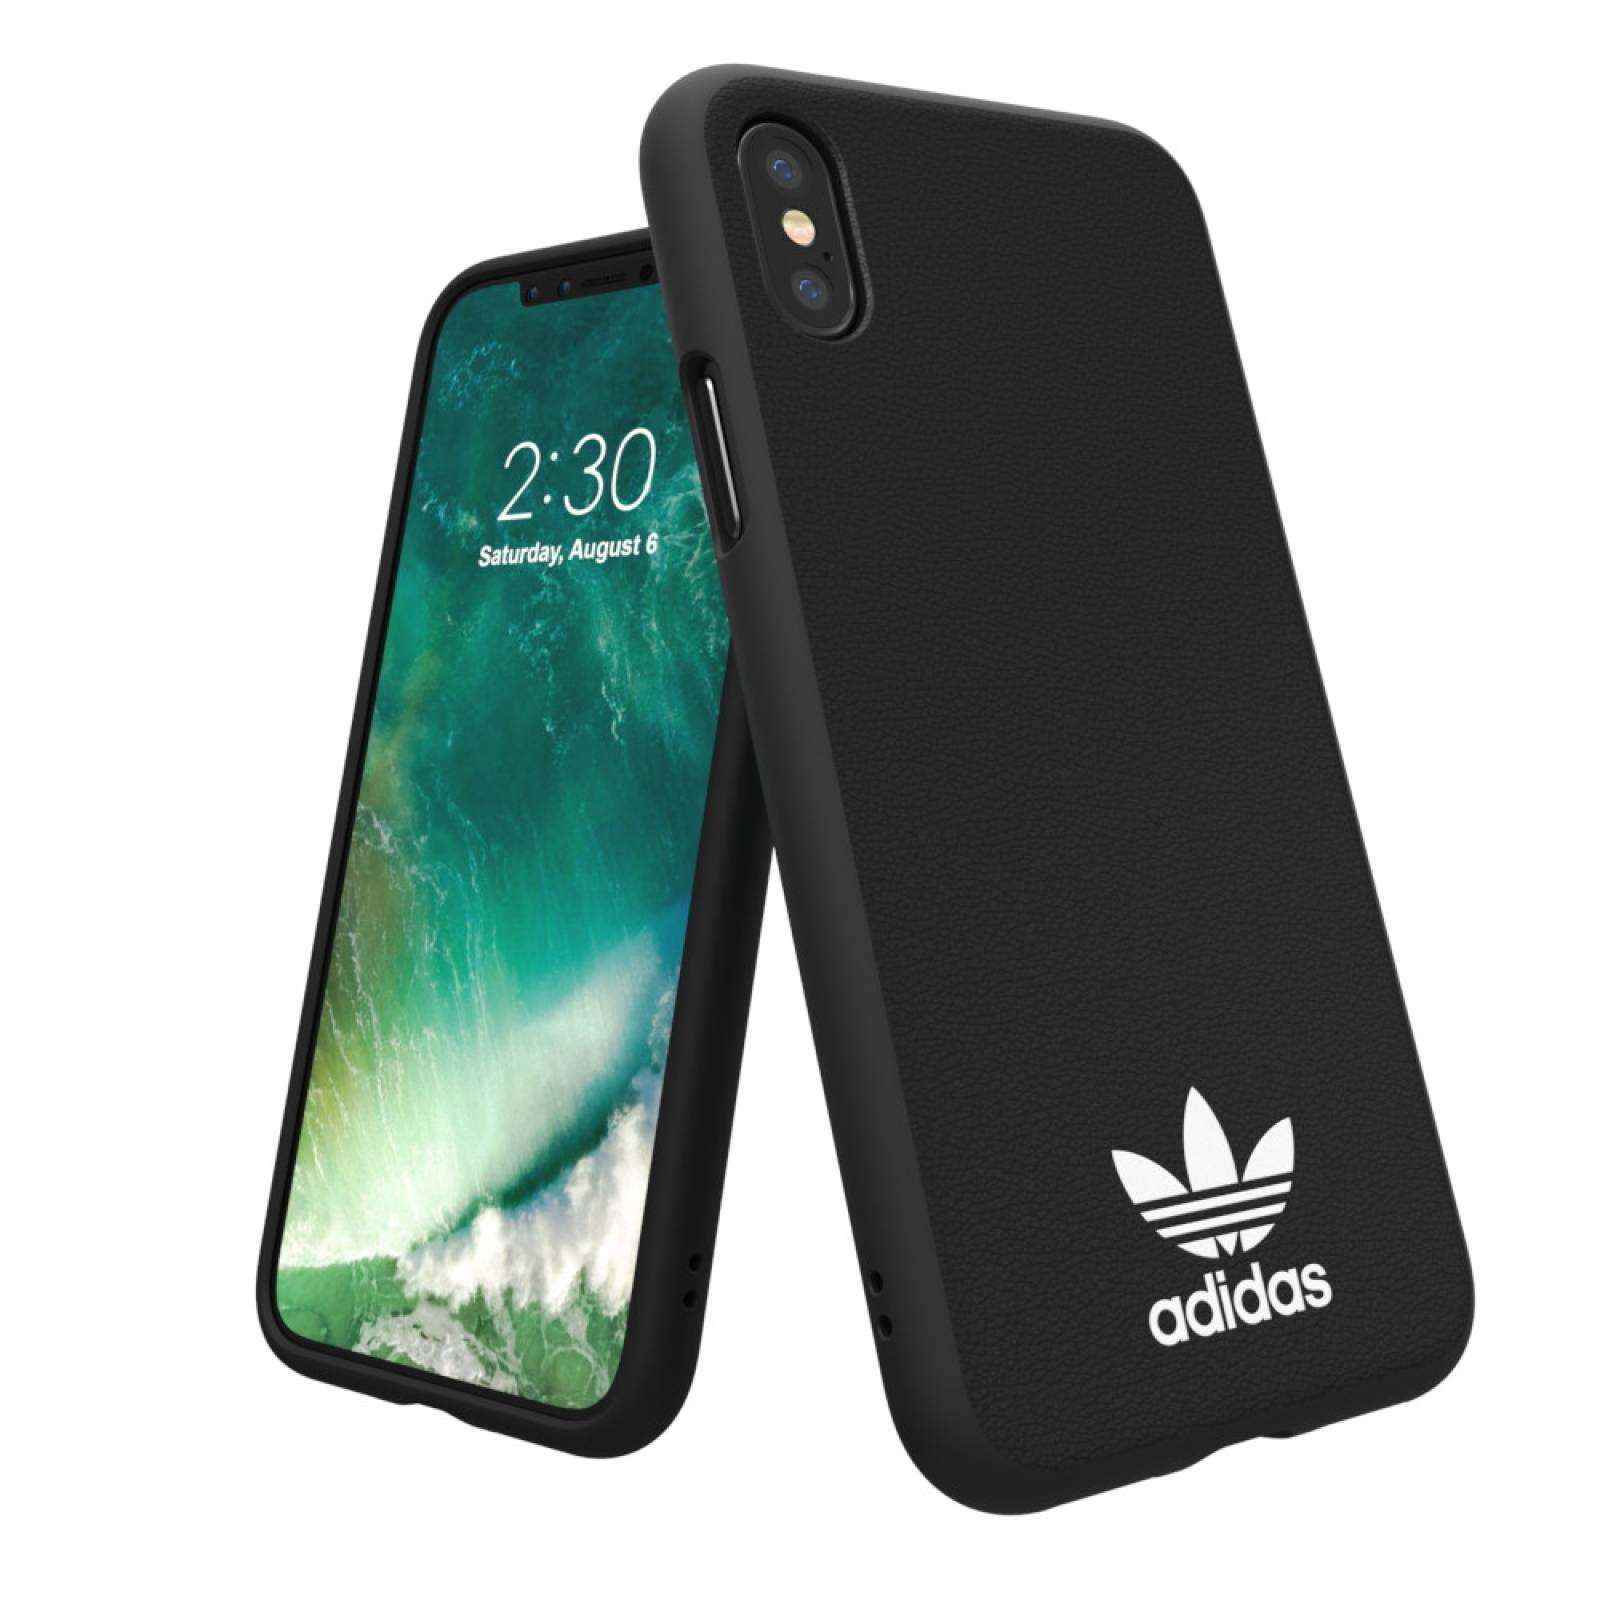 Funda Adidas Originals iPhone XS y X Moulded Negro